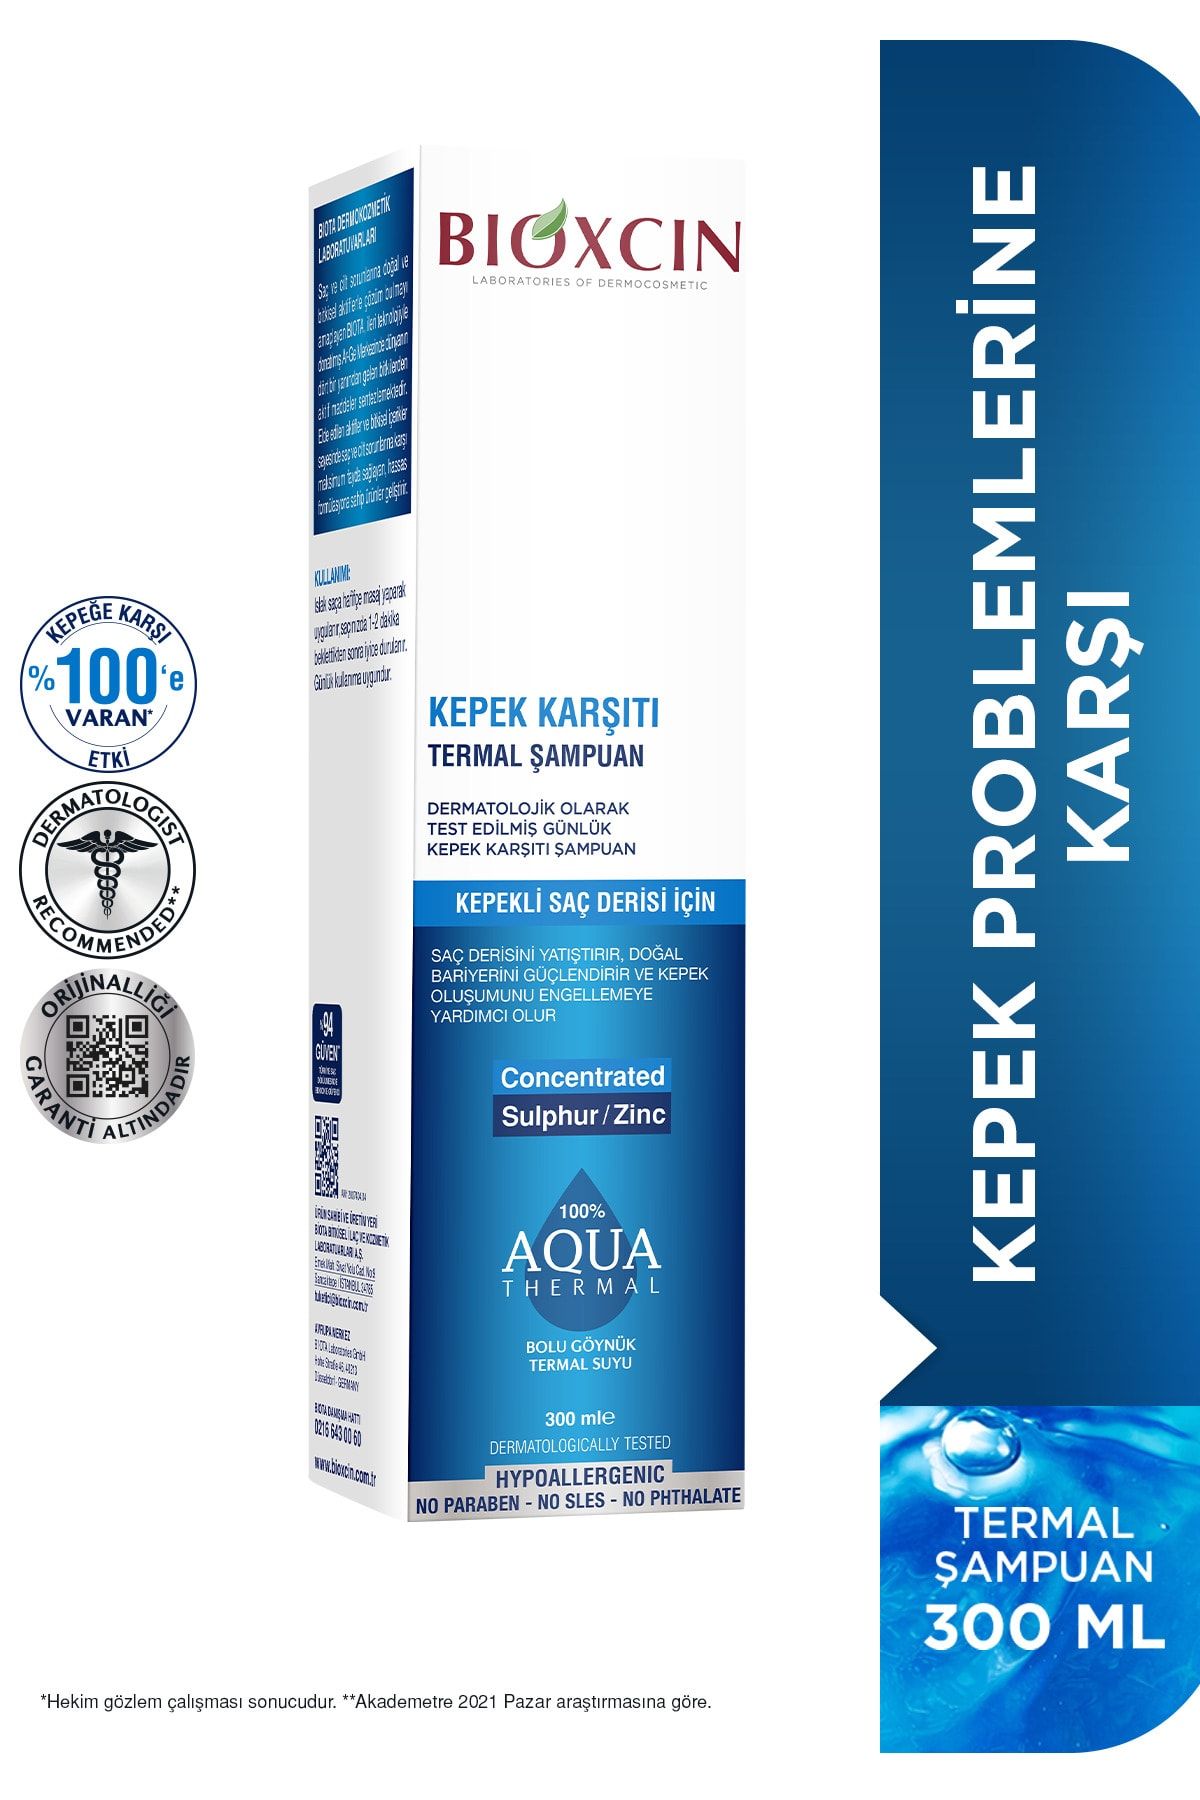 Bioxcin Aqua Thermal Kepek Karşıtı Şampuan 300ml Tüm Saç Tipleri